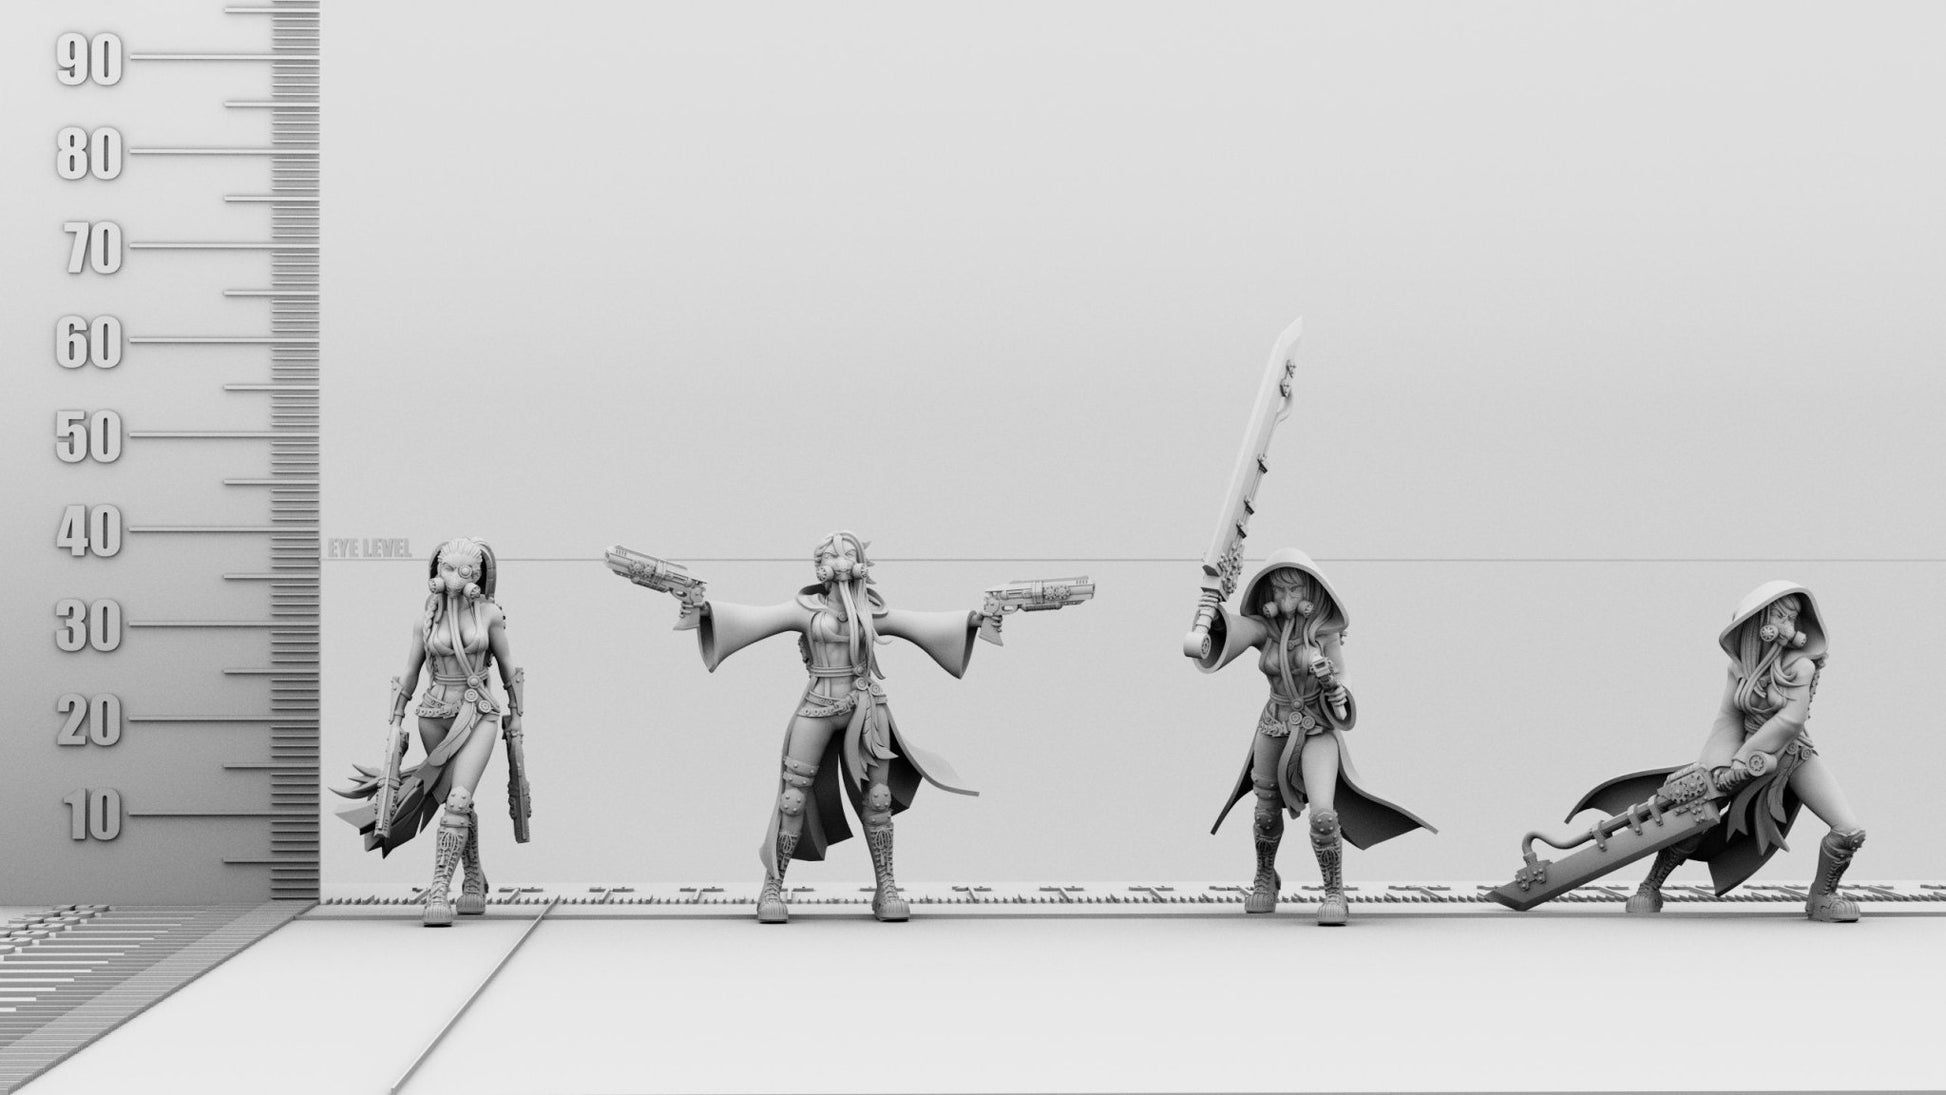 Aurora faction | Command Squad | MEDIC | 3D Printed | Figurine | Feathr0z